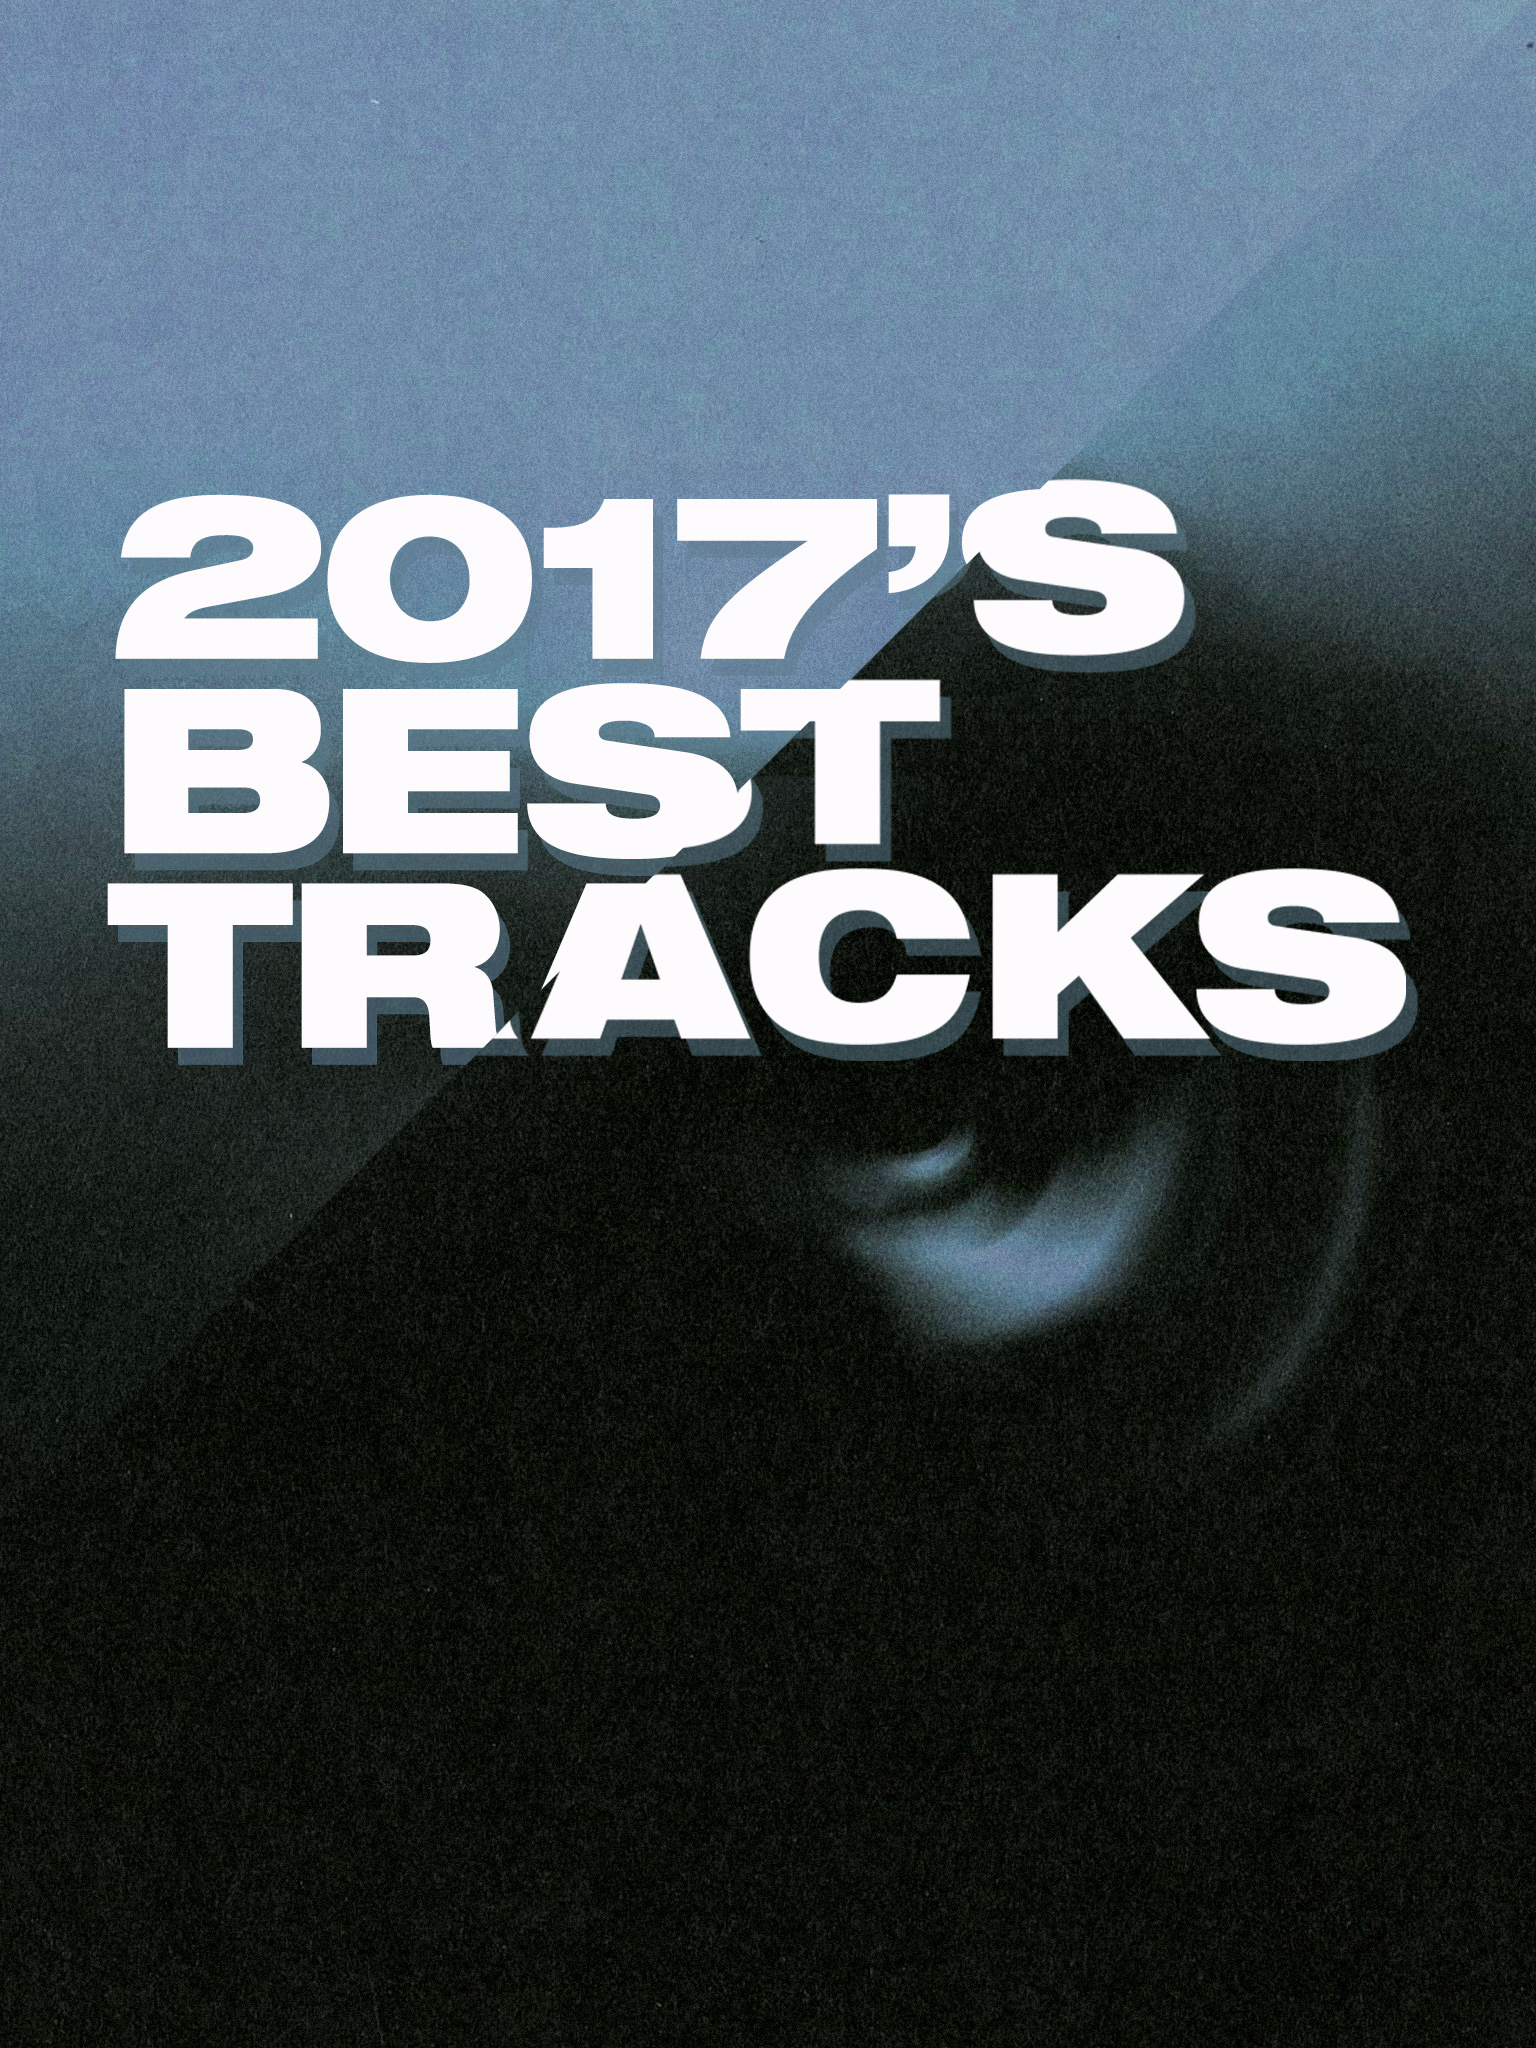 2017's Best Tracks